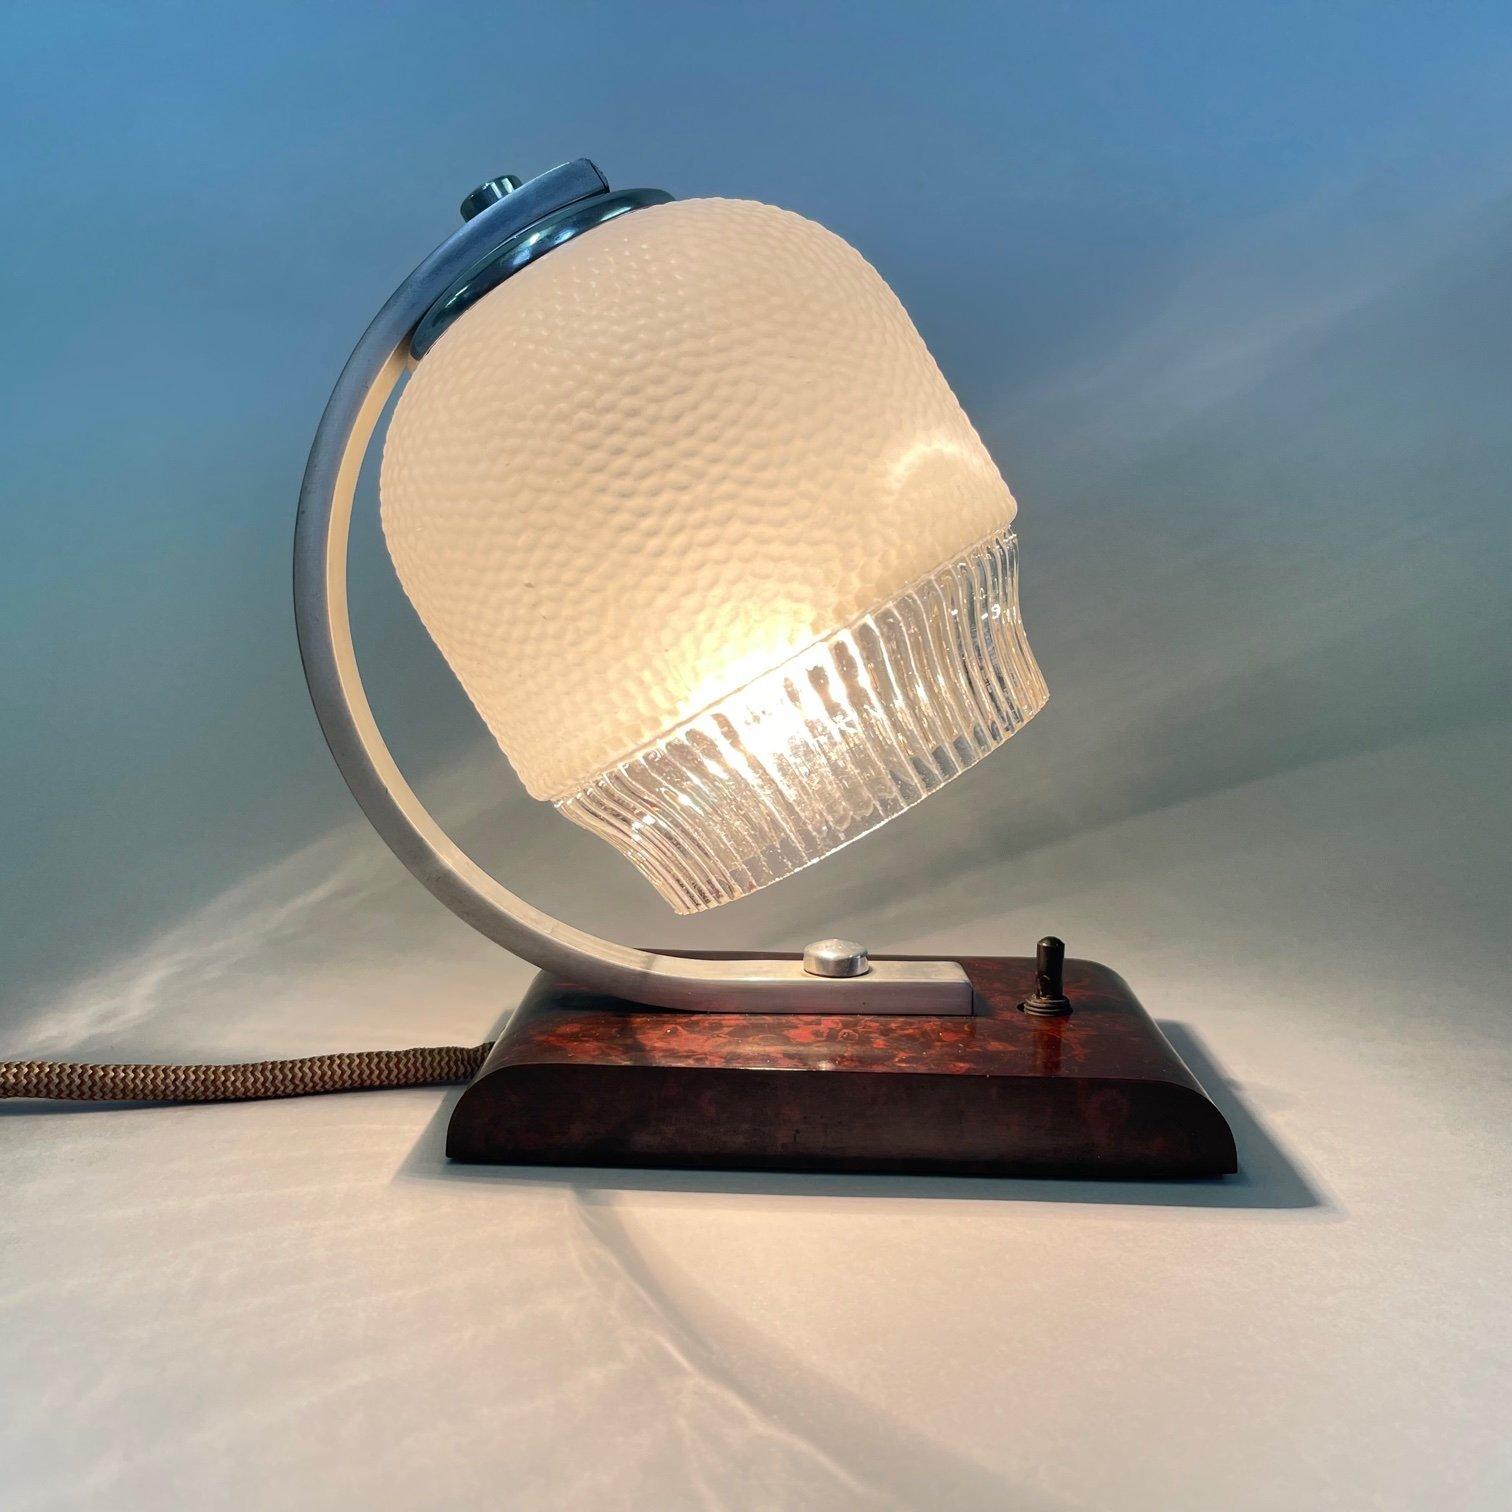 Very nice small vintage table lamp made of glass, metal and imitation veneer.